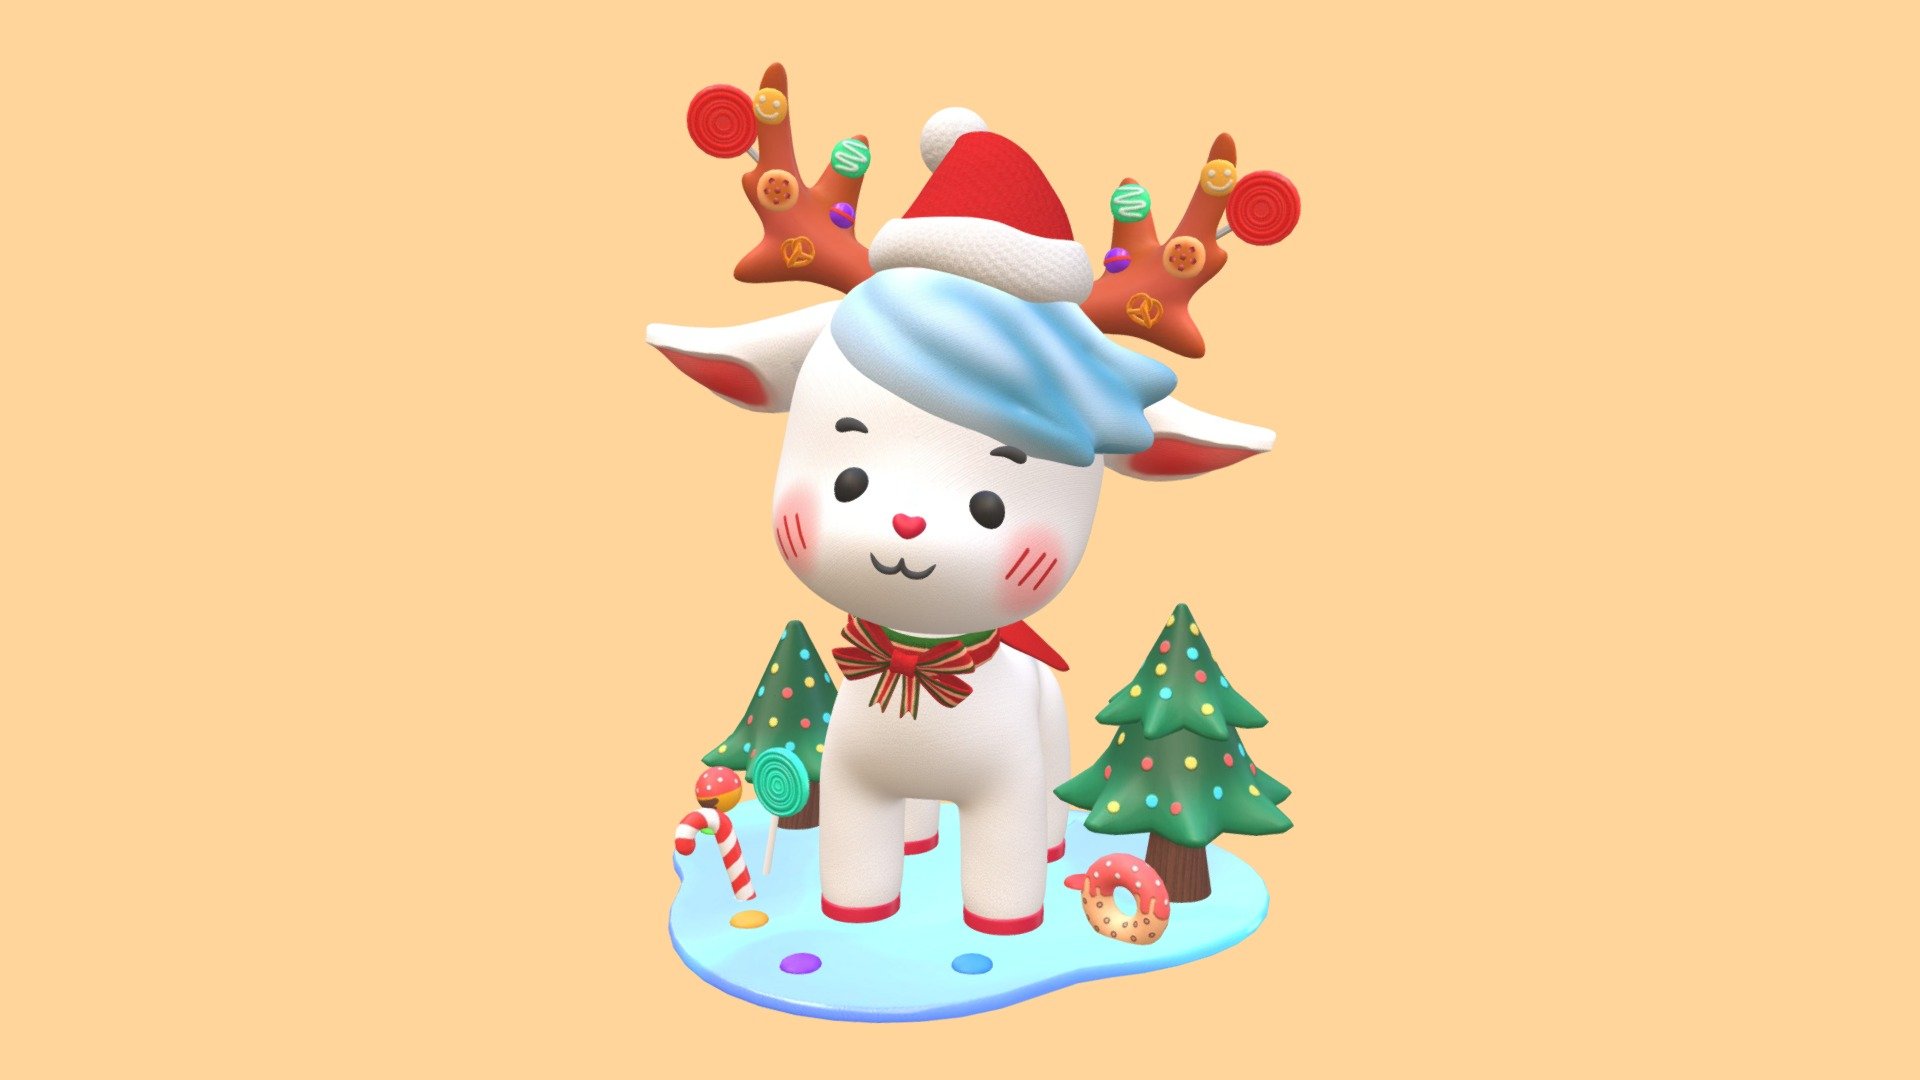 You can support me here ♥

https://ko-fi.com/kiiztie - Christmas cute reindeer - Download Free 3D model by kiiztie 3d model